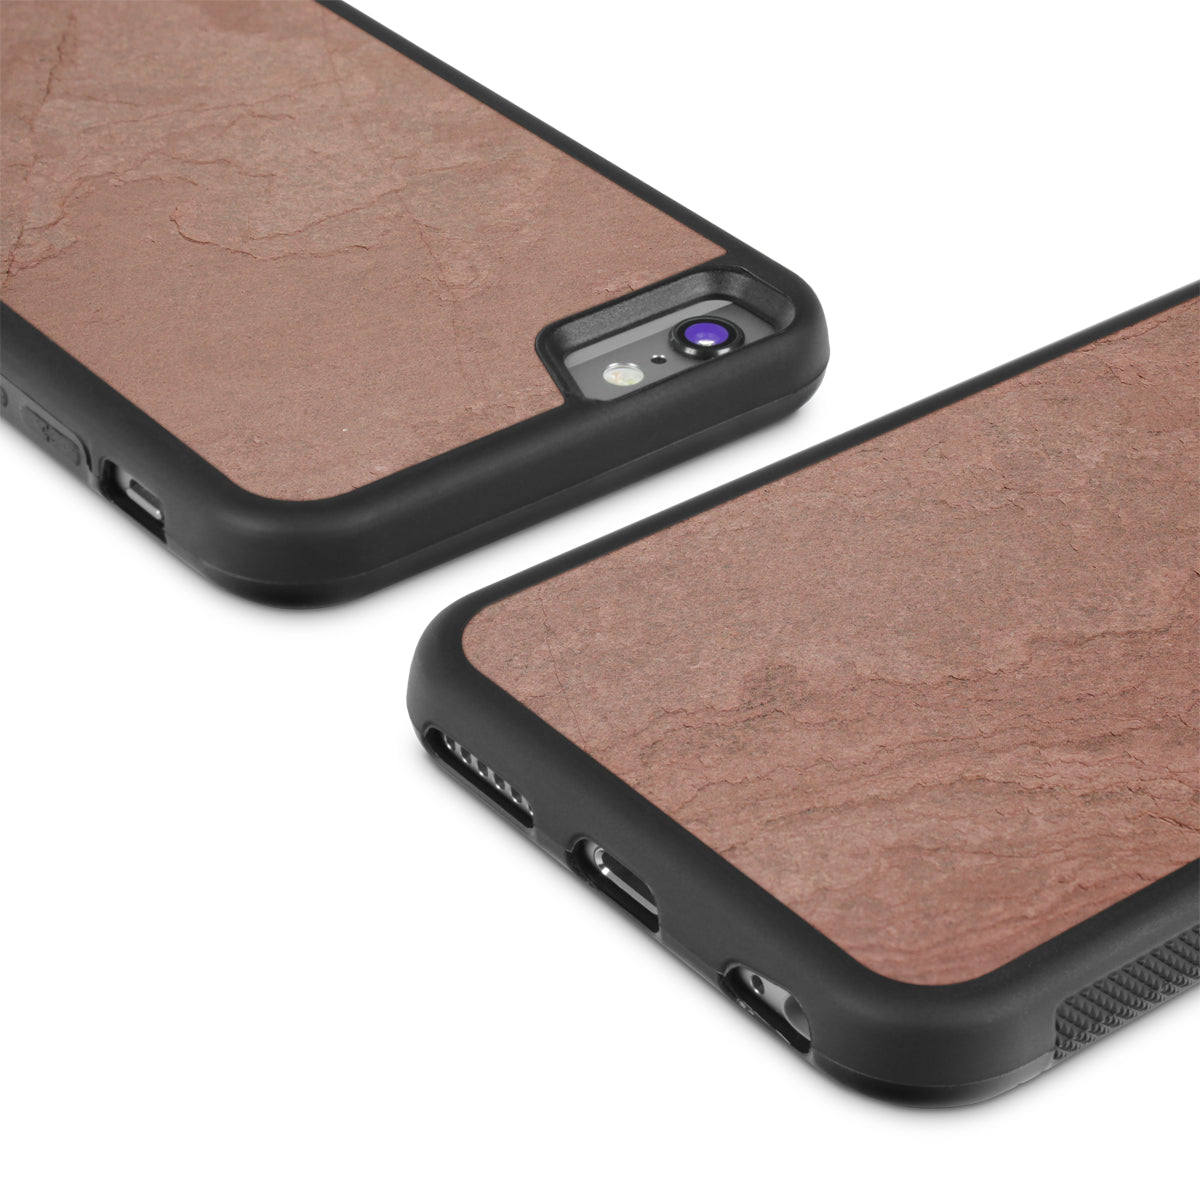 iPhone 6/6s —  Stone Explorer Case